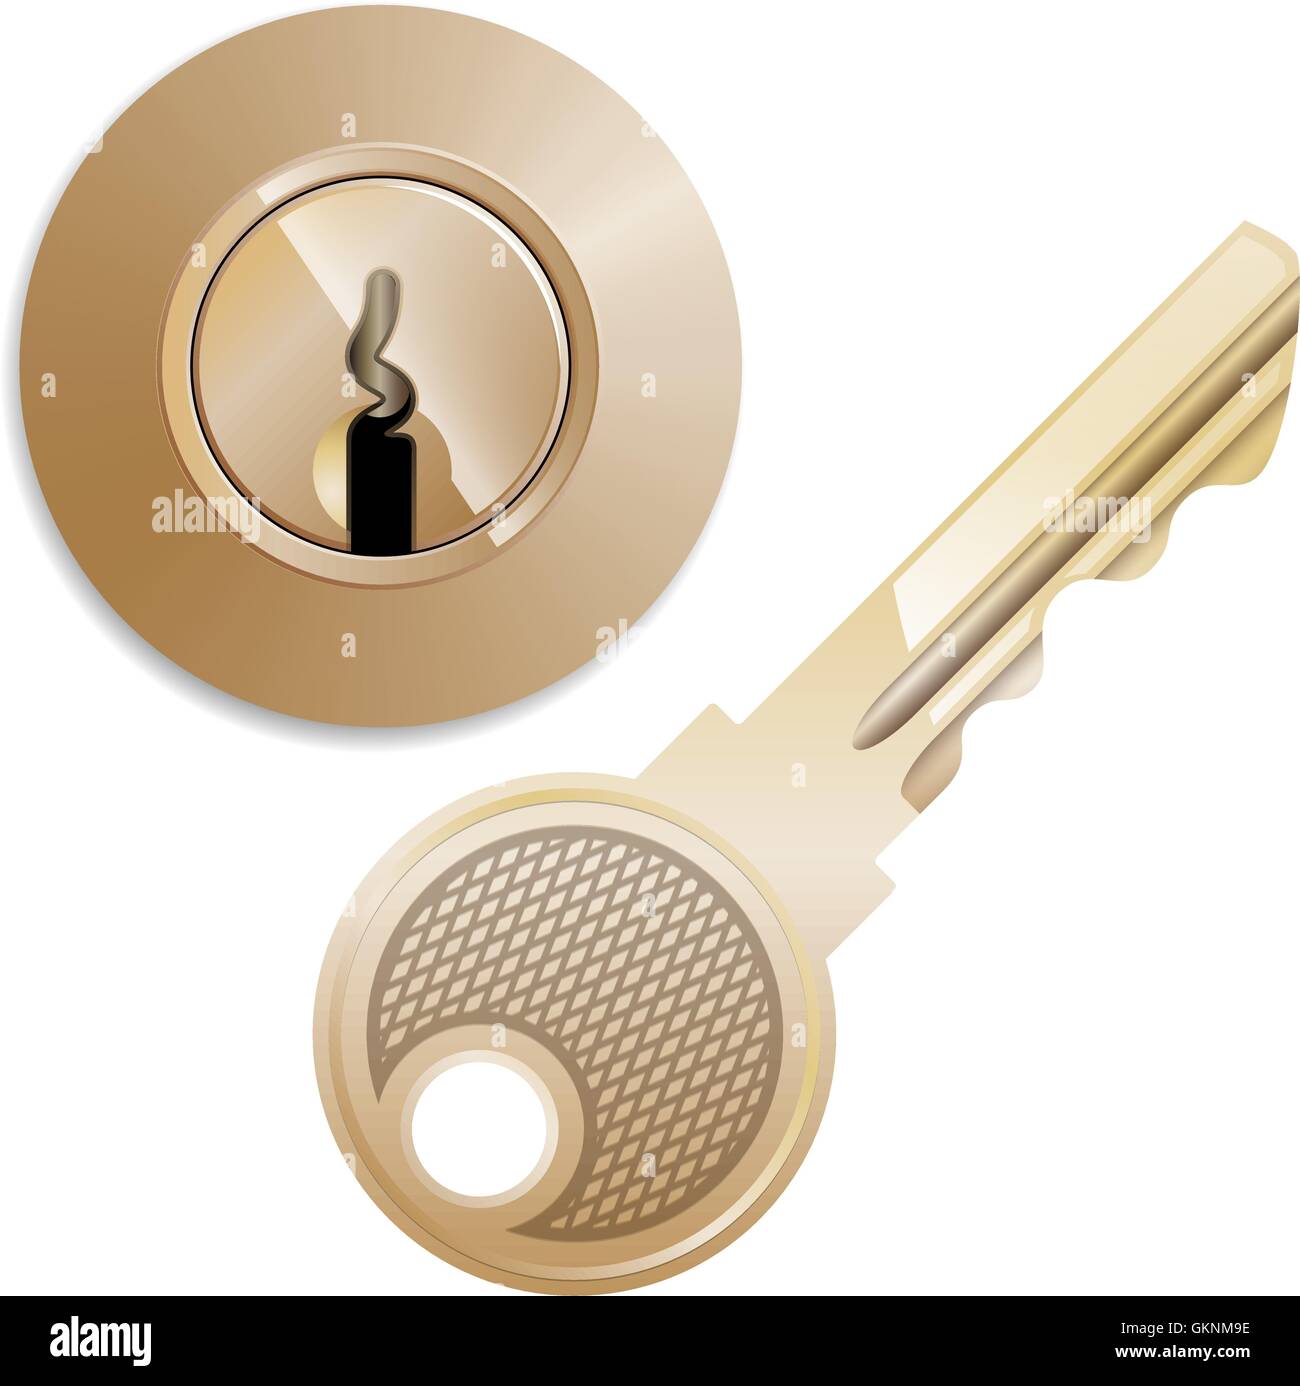 round Pin tumbler lock and key Stock Vector